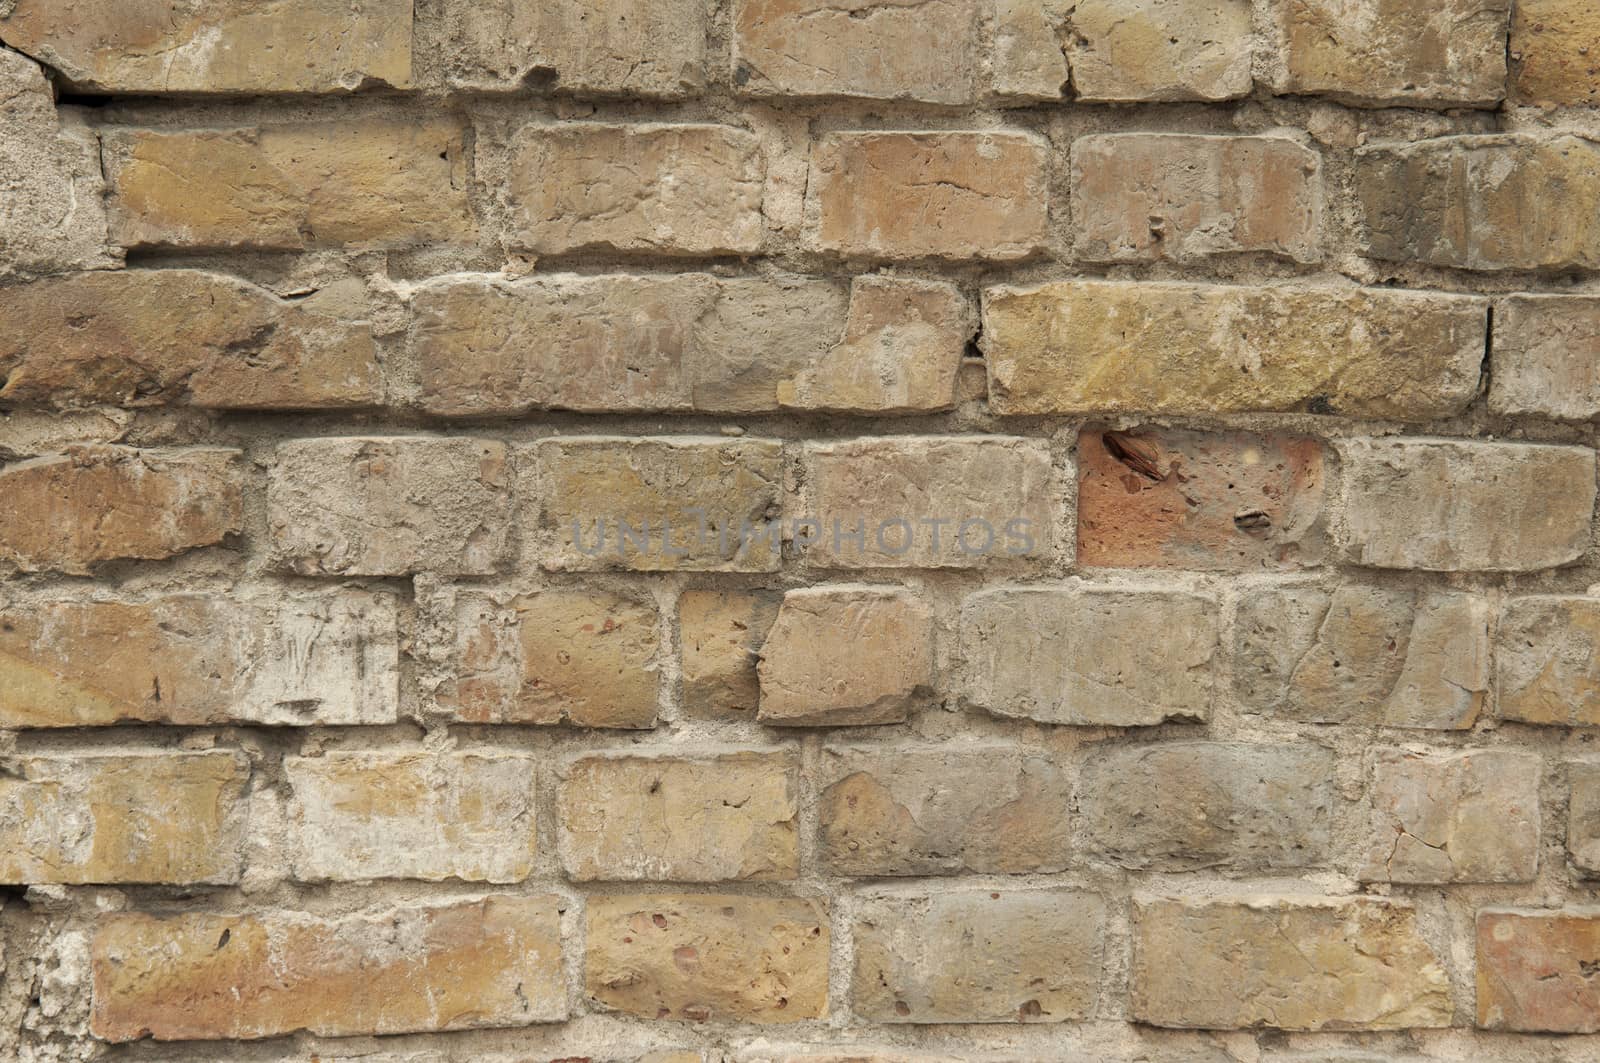 Brick Wall Texture by rodrigobellizzi